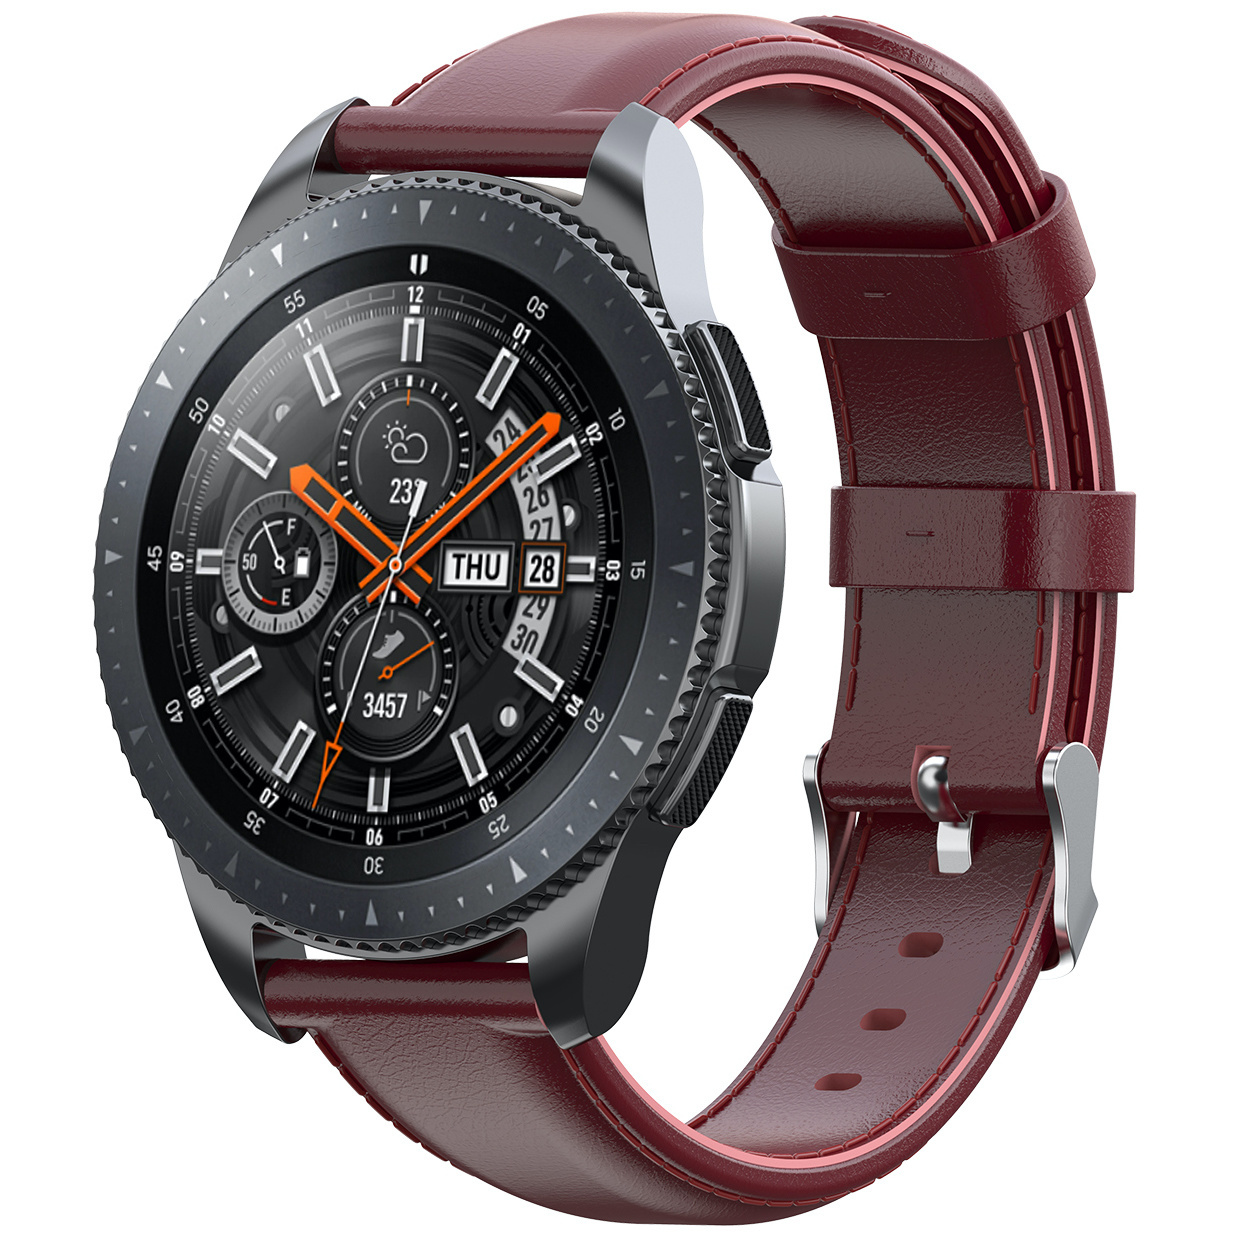 Cinturino in pelle per Huawei Watch GT - rosso vino